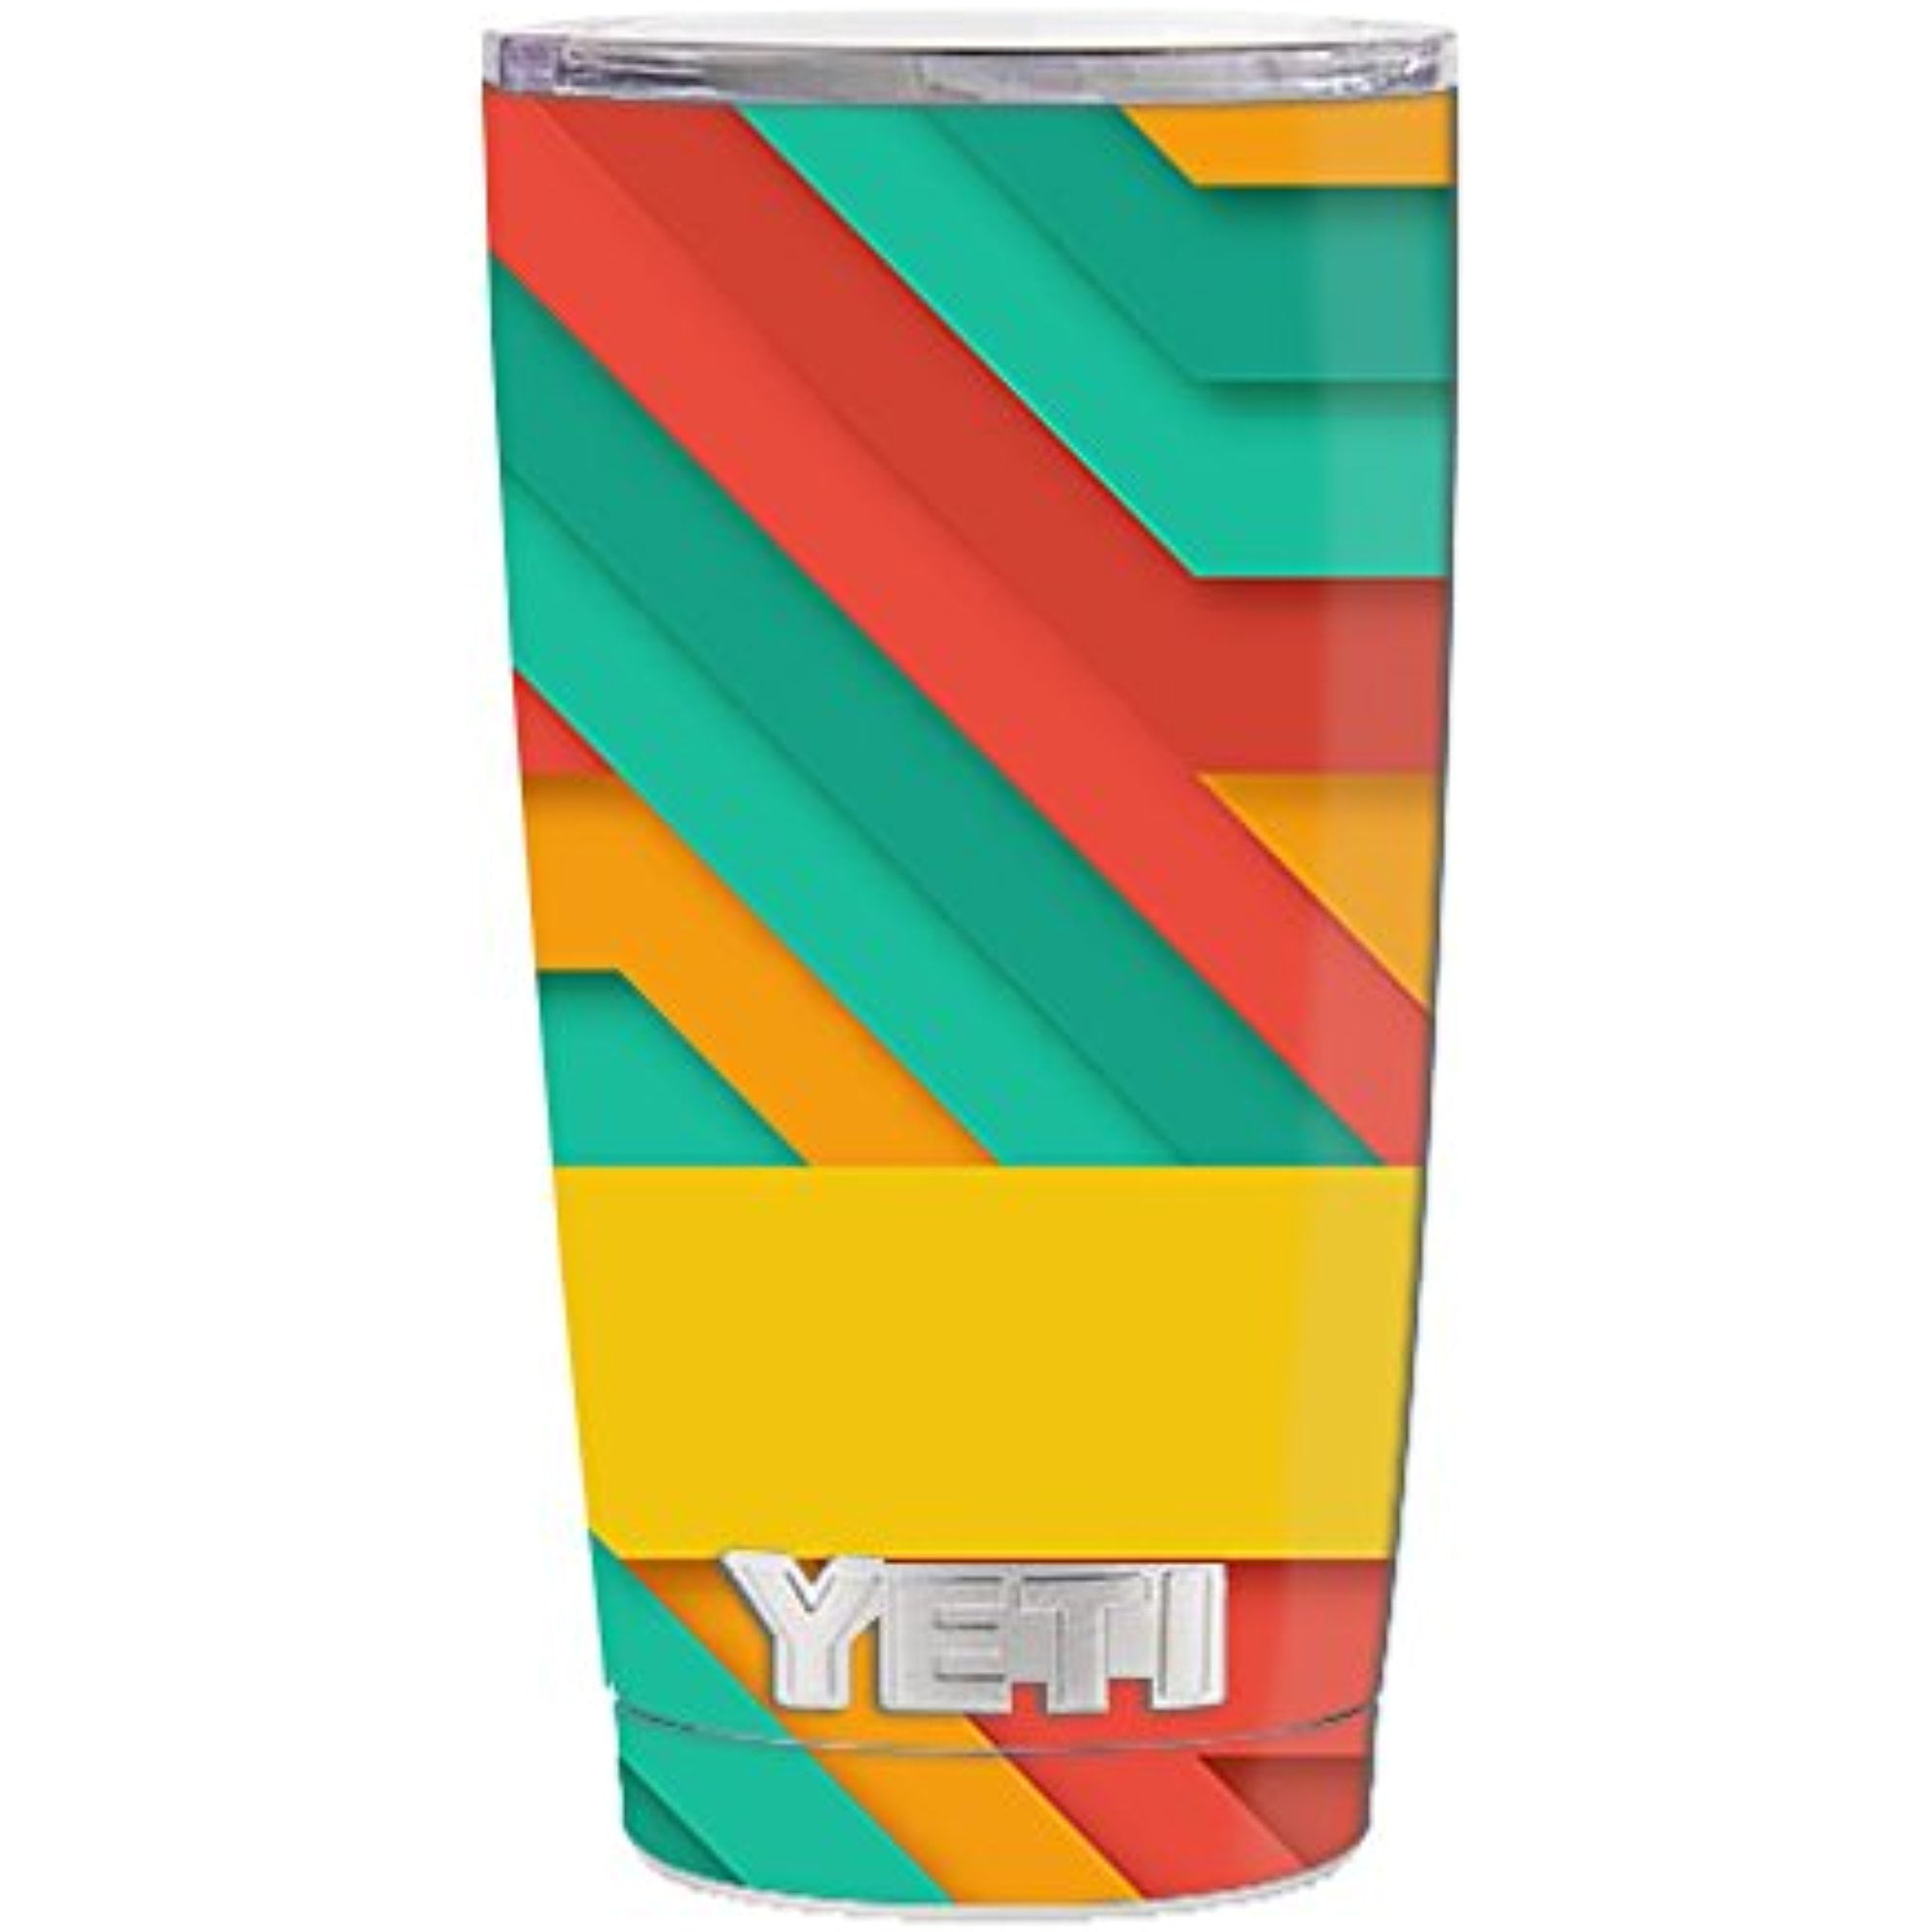 Skin for Yeti Rambler 20 oz Tumbler - Solid State Yellow - Sticker Decal Wrap